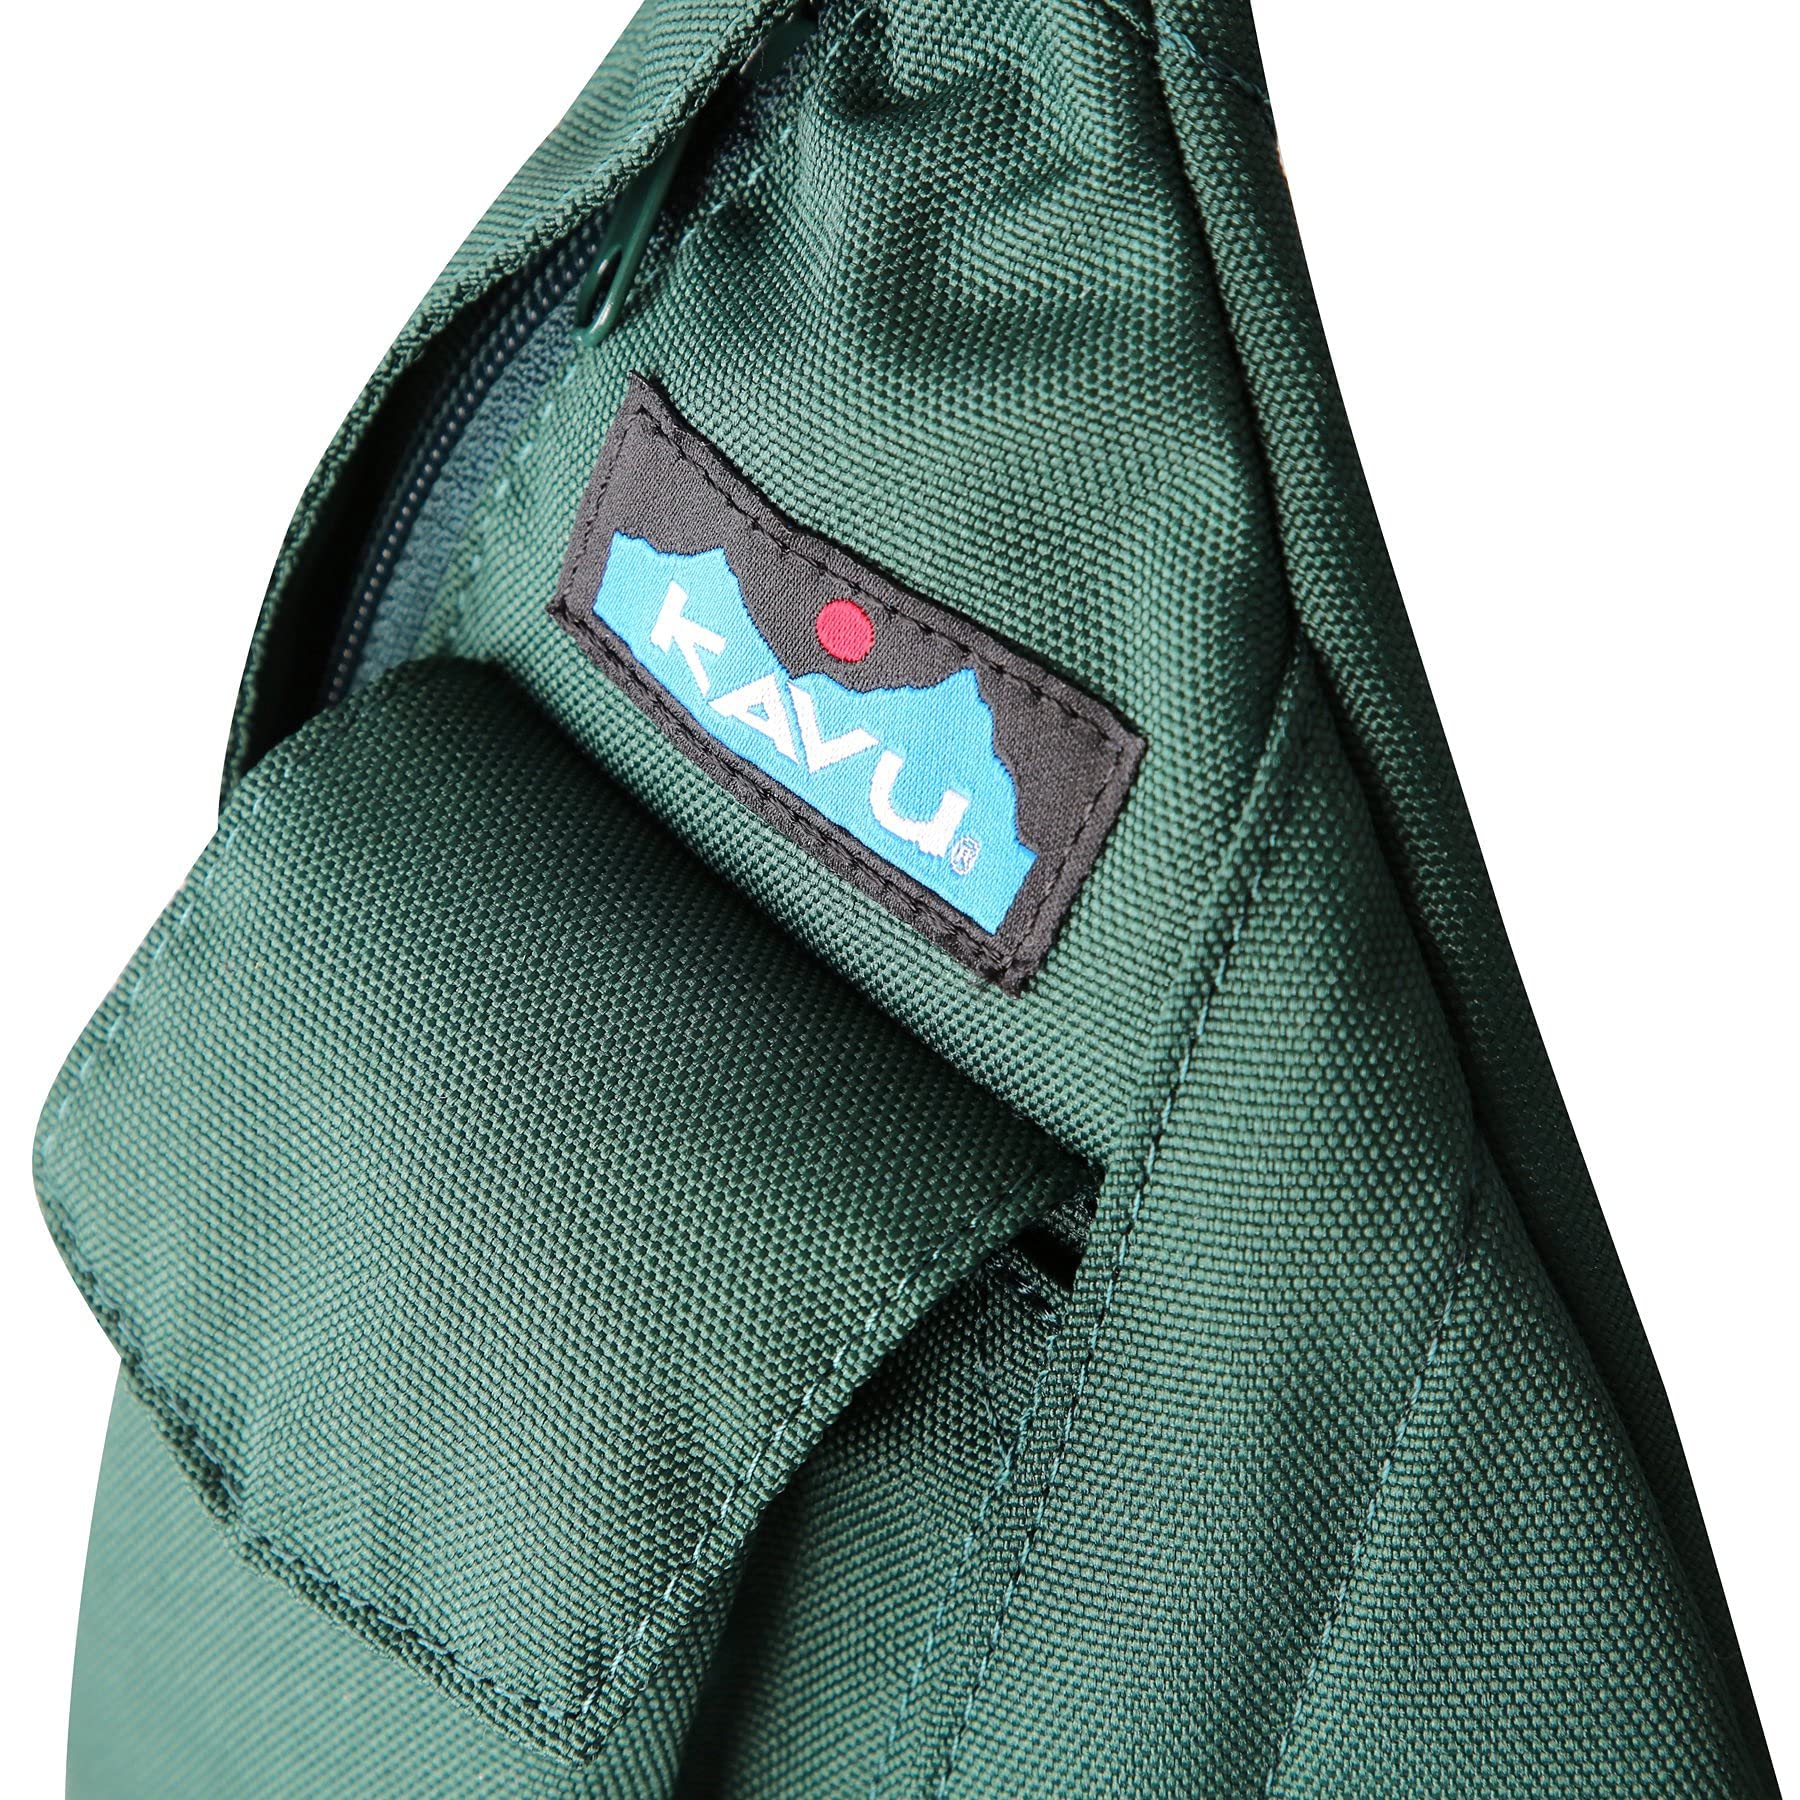 KAVU Basic-Multipurpose-Backpacks, Evergreen, One Size